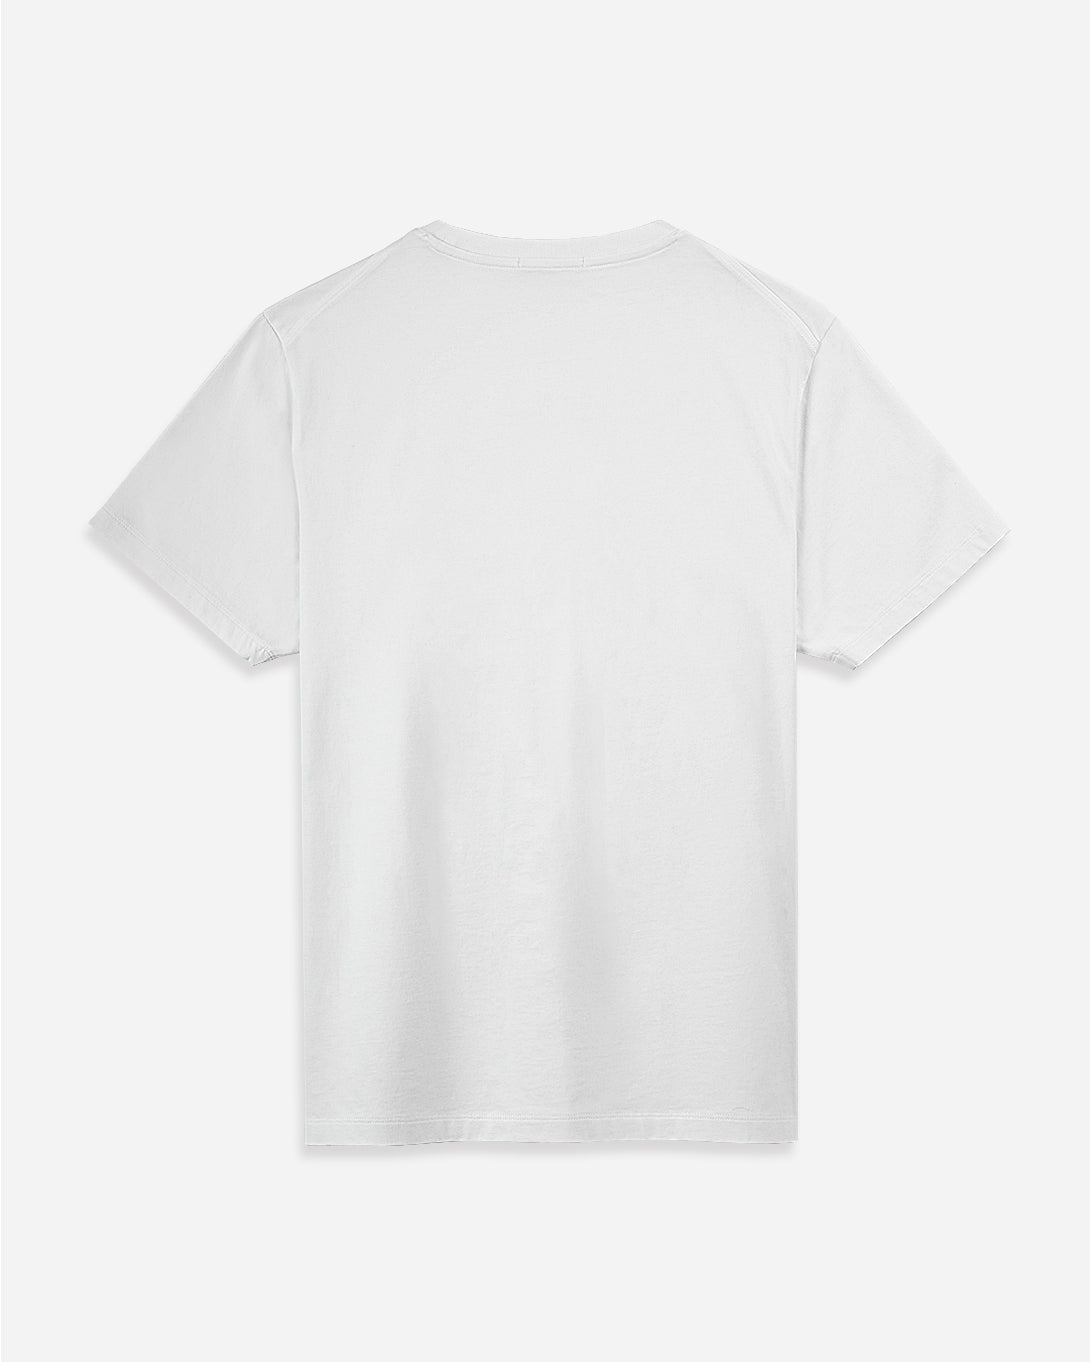 BRIGHT WHITE Village Crew Neck Tee Mens Basic Neutral Logo Short Sleeve Shirts